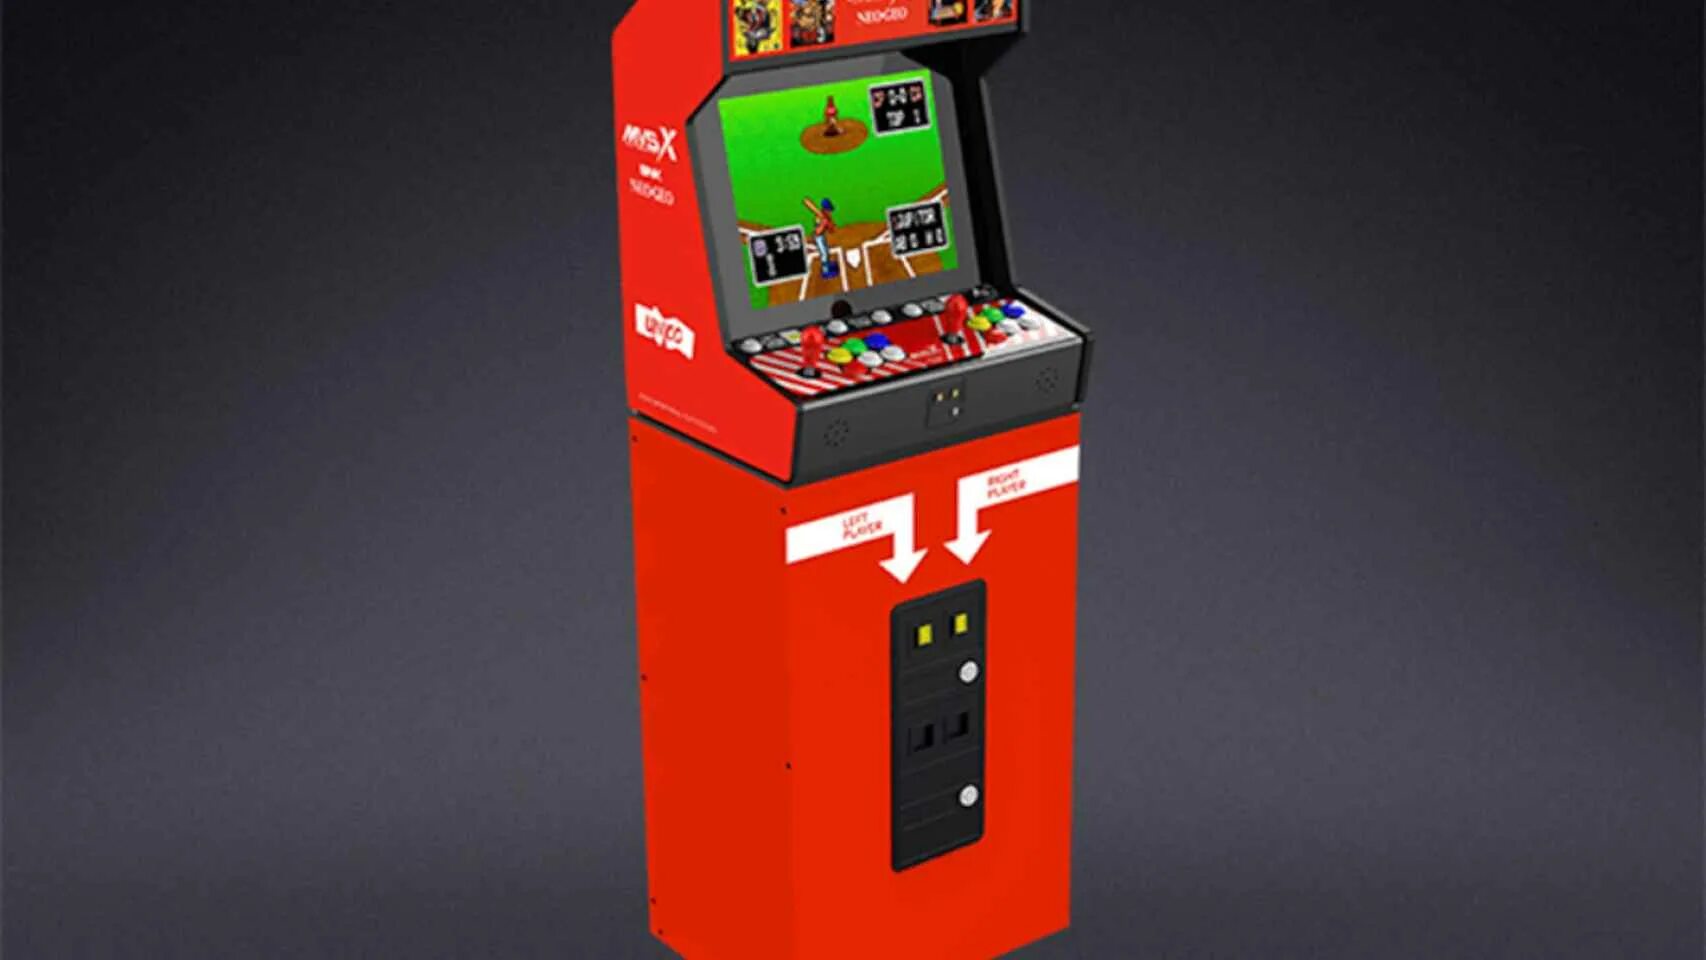 Игровые автоматы киви на андроид. Neo geo автомат. Игровой автомат Neo geo. SNK Neo geo Arcade.